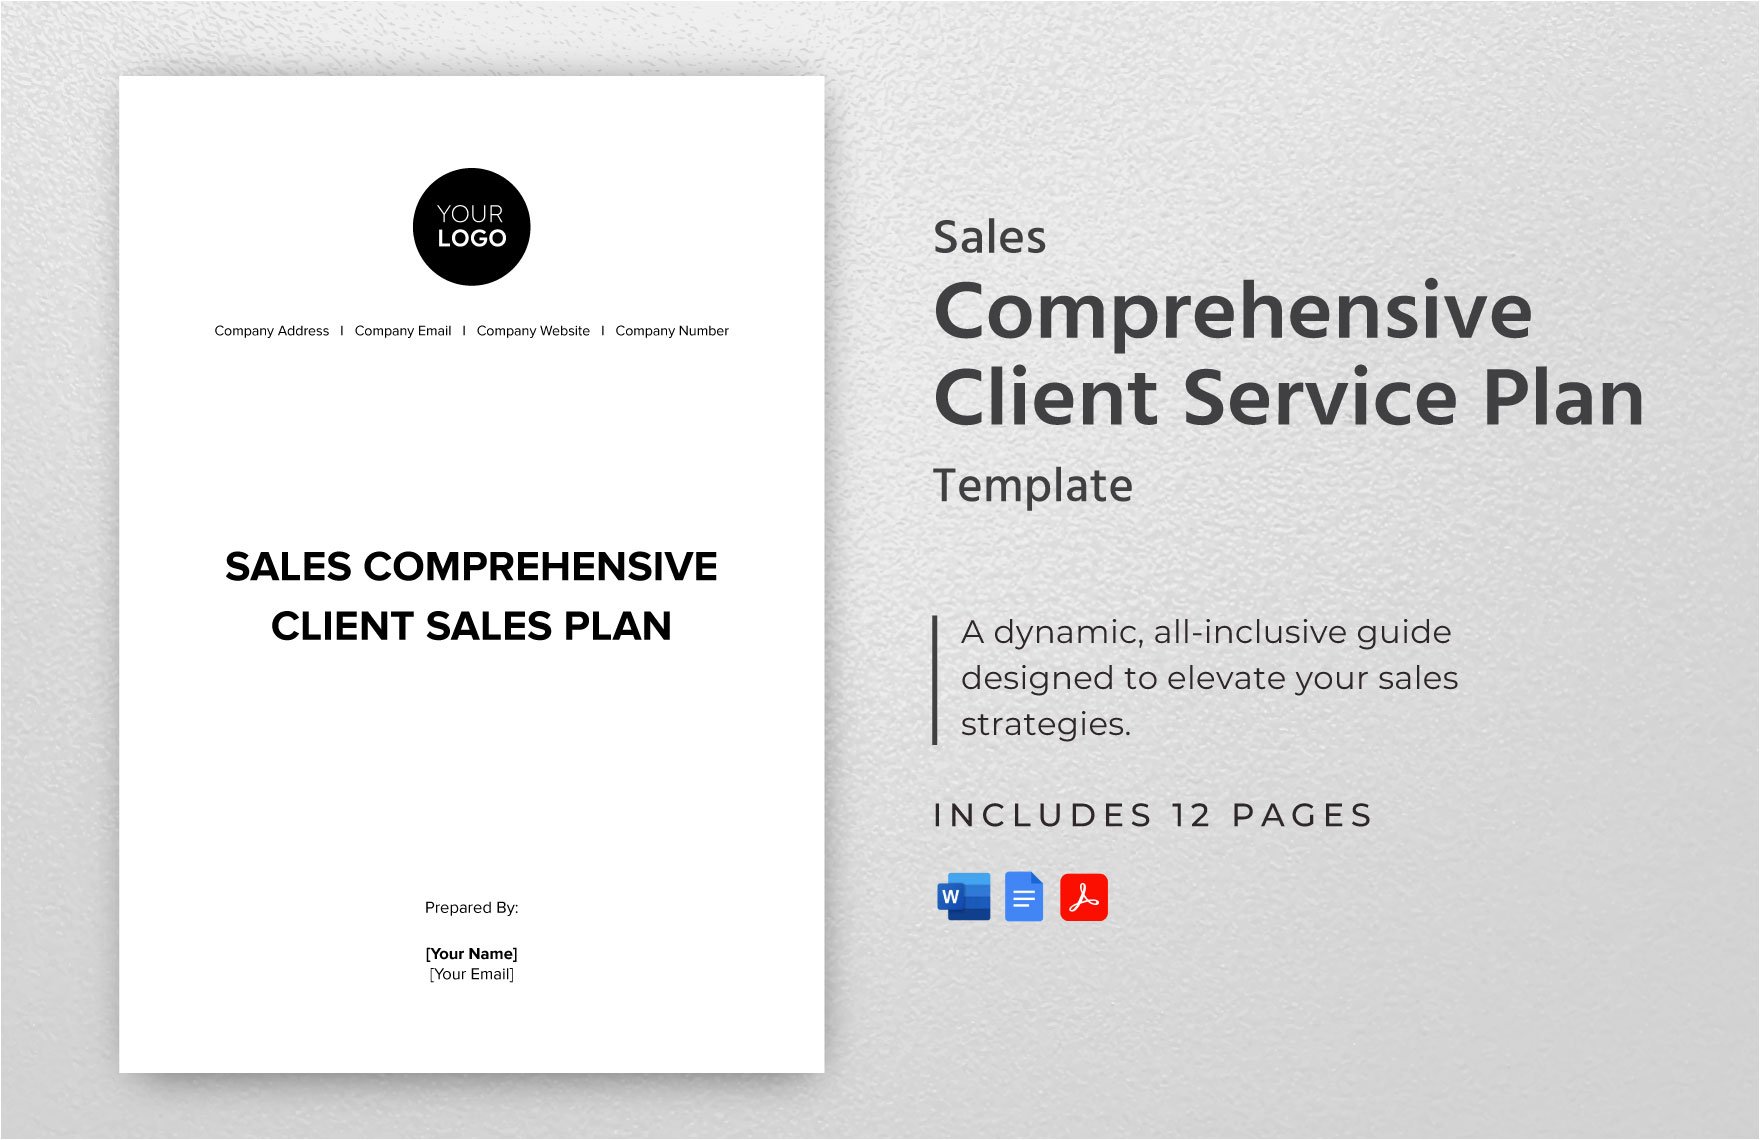 Sales Comprehensive Client Service Plan Template in Word, Google Docs, PDF